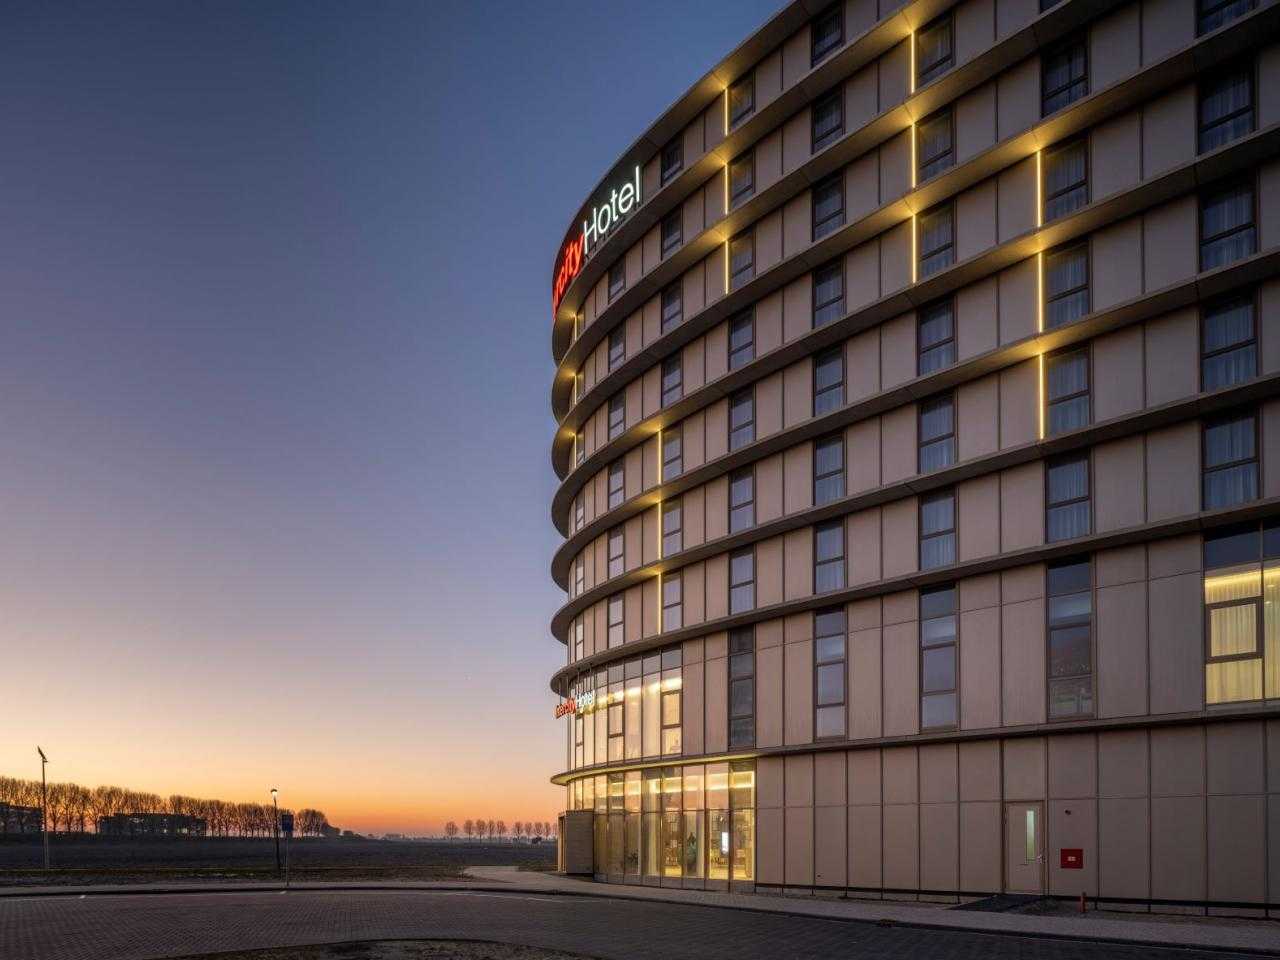 Intercity Hotel with sunset